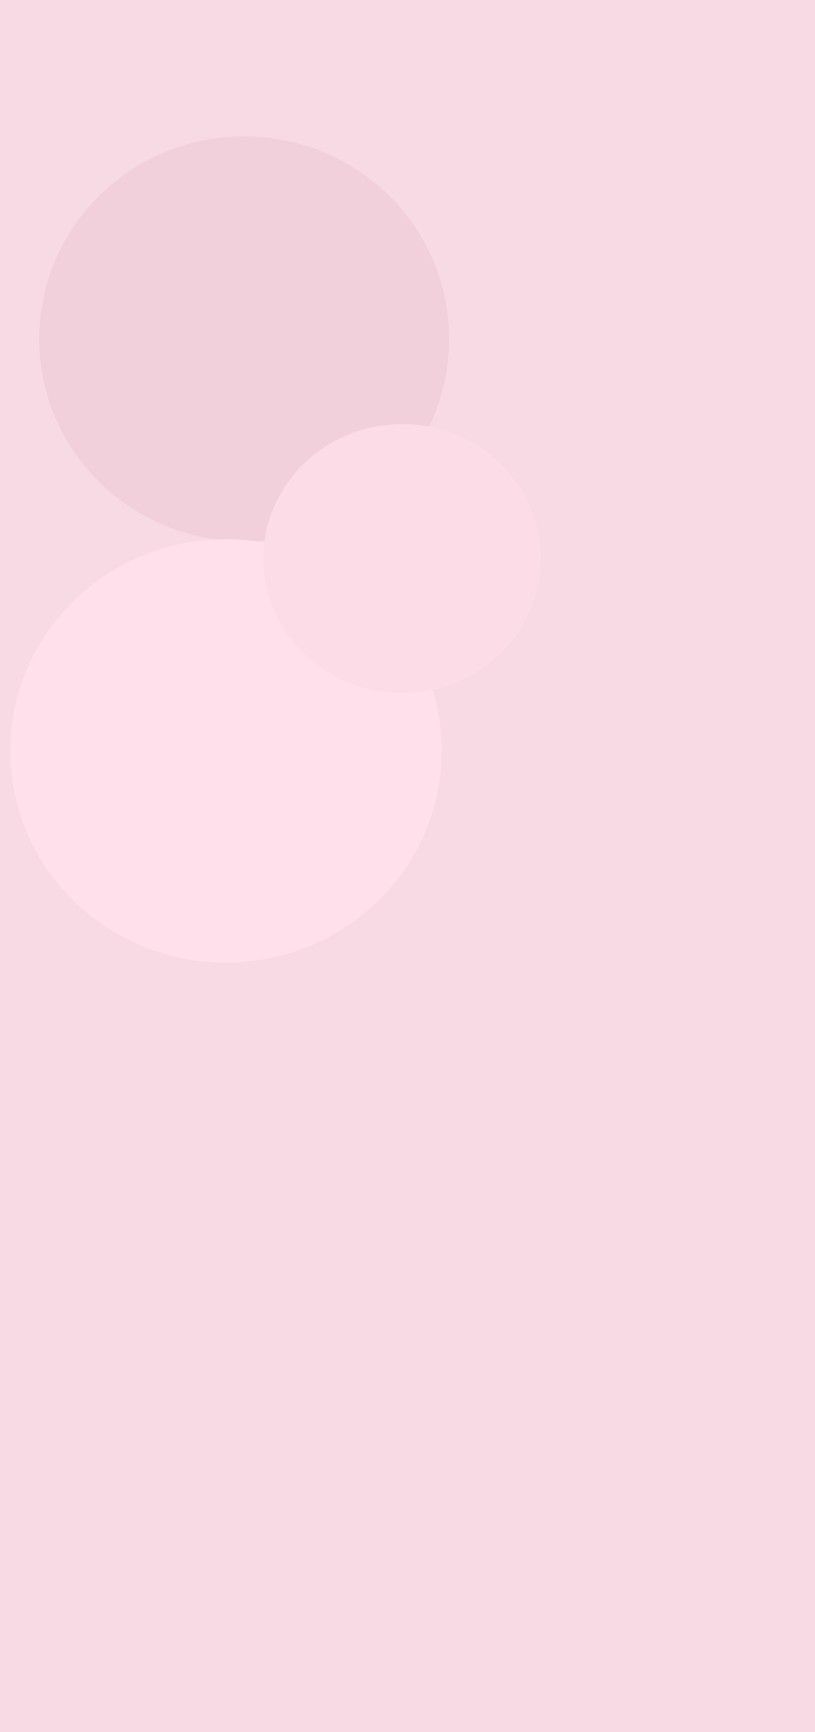 Hello kitty wallpaper , pink ,light pink ,pastel pink aesthetic wallpaper